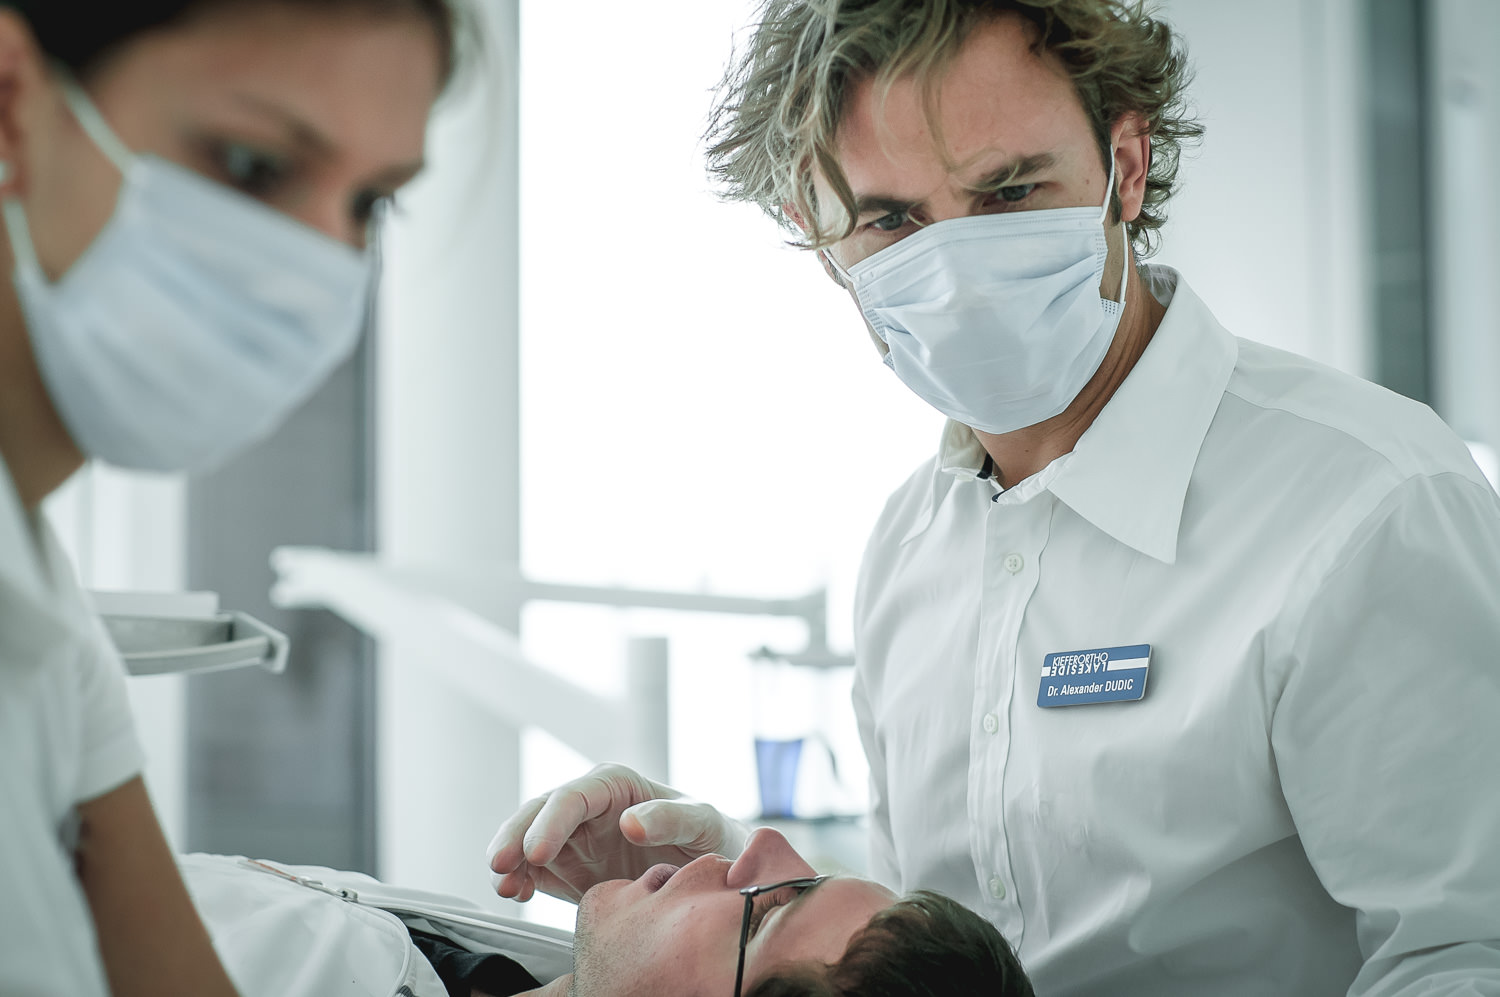 Orthodontics-Lakeside-Kieferortho-Waedenswil-Zurich-Braces-Invisalign-Lingual-Dental-Office-Dr-Med-Dentist-English-Treatment-3.jpg